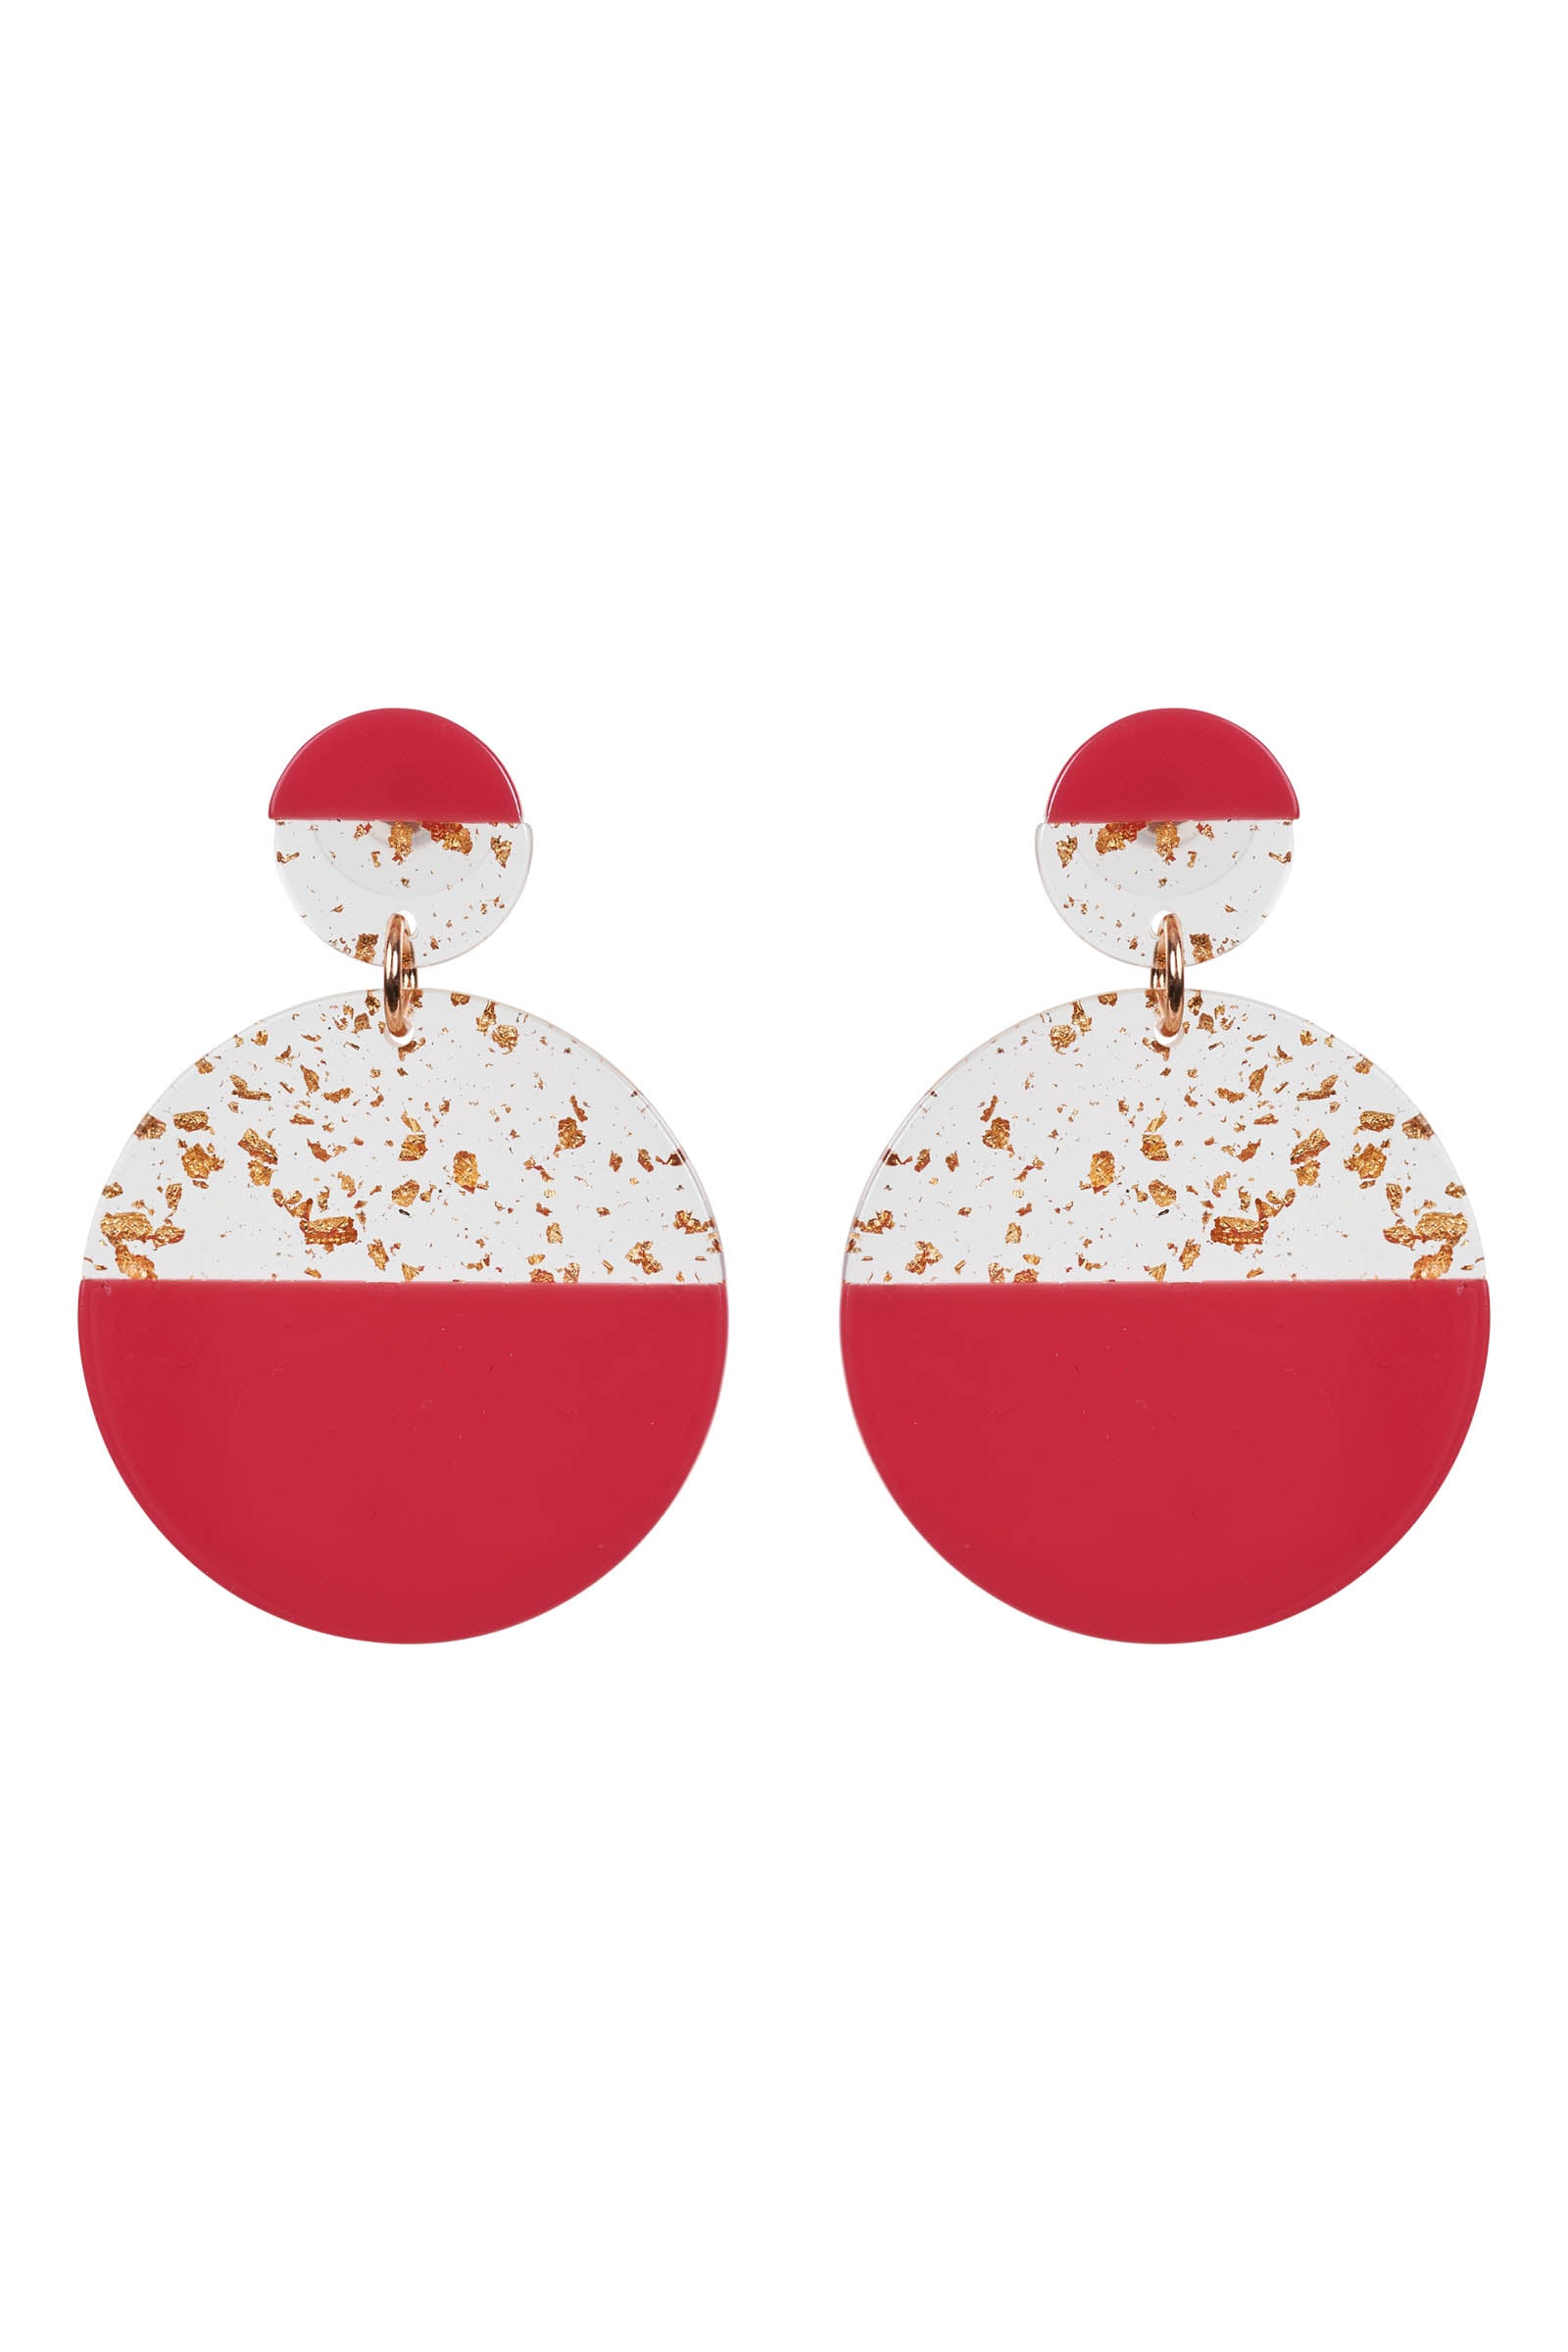 La Vie Dome Earring - Candy - eb&ive Earring